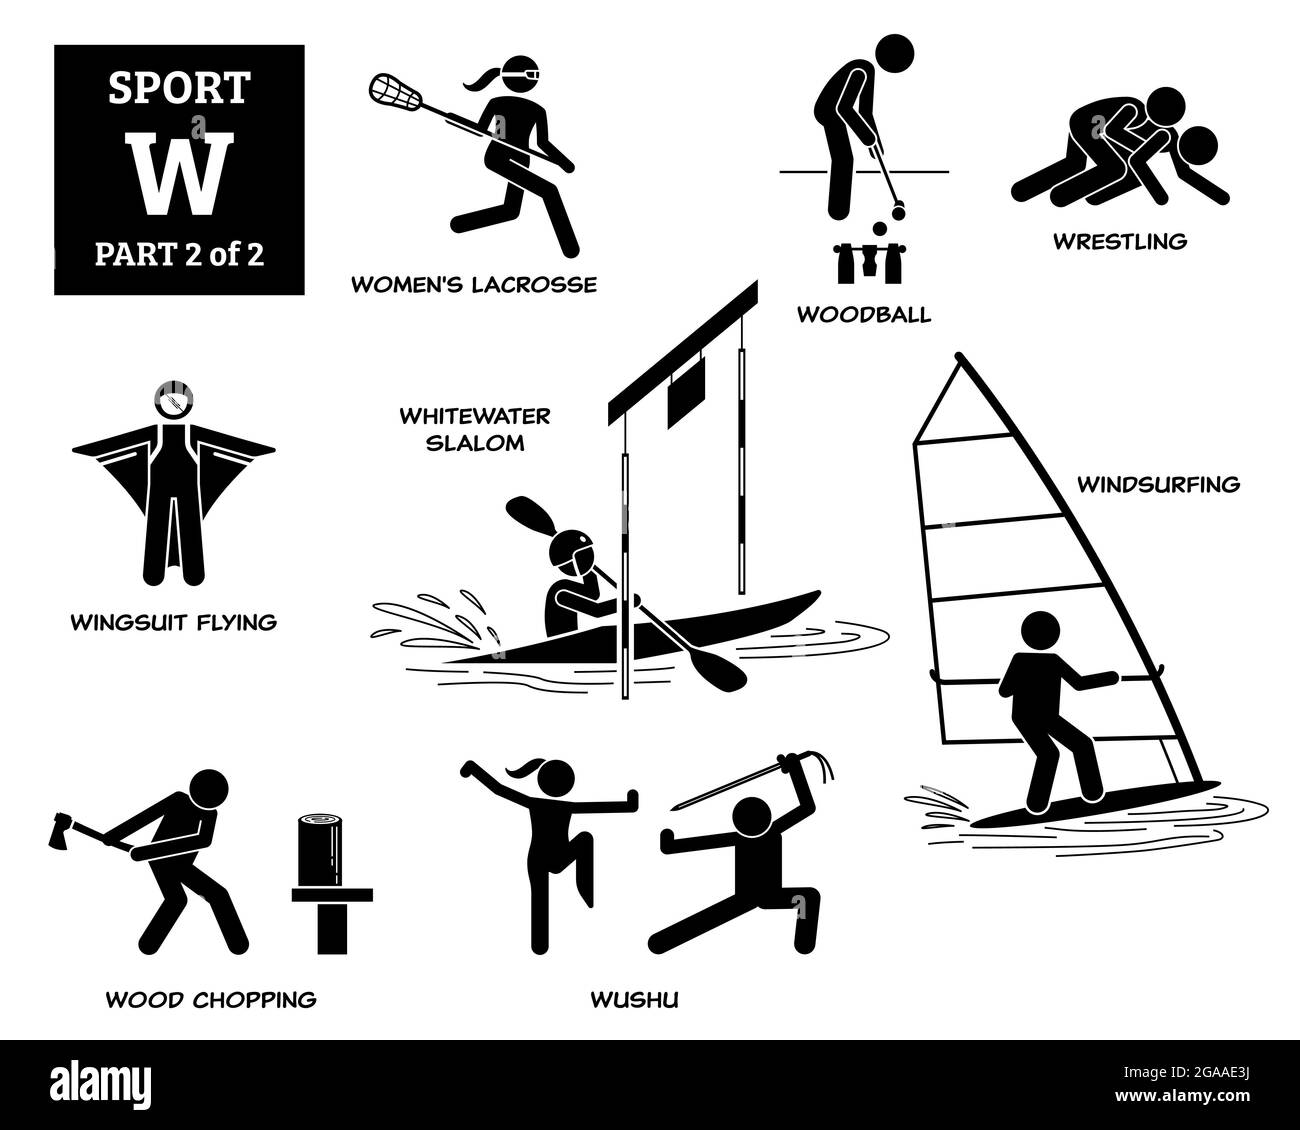 Sport games alphabet W vector icons pictogram. Women lacrosse, woodball, wrestling, wingsuit flying, whitewater slalom, windsurfing, wood chopping, an Stock Vector